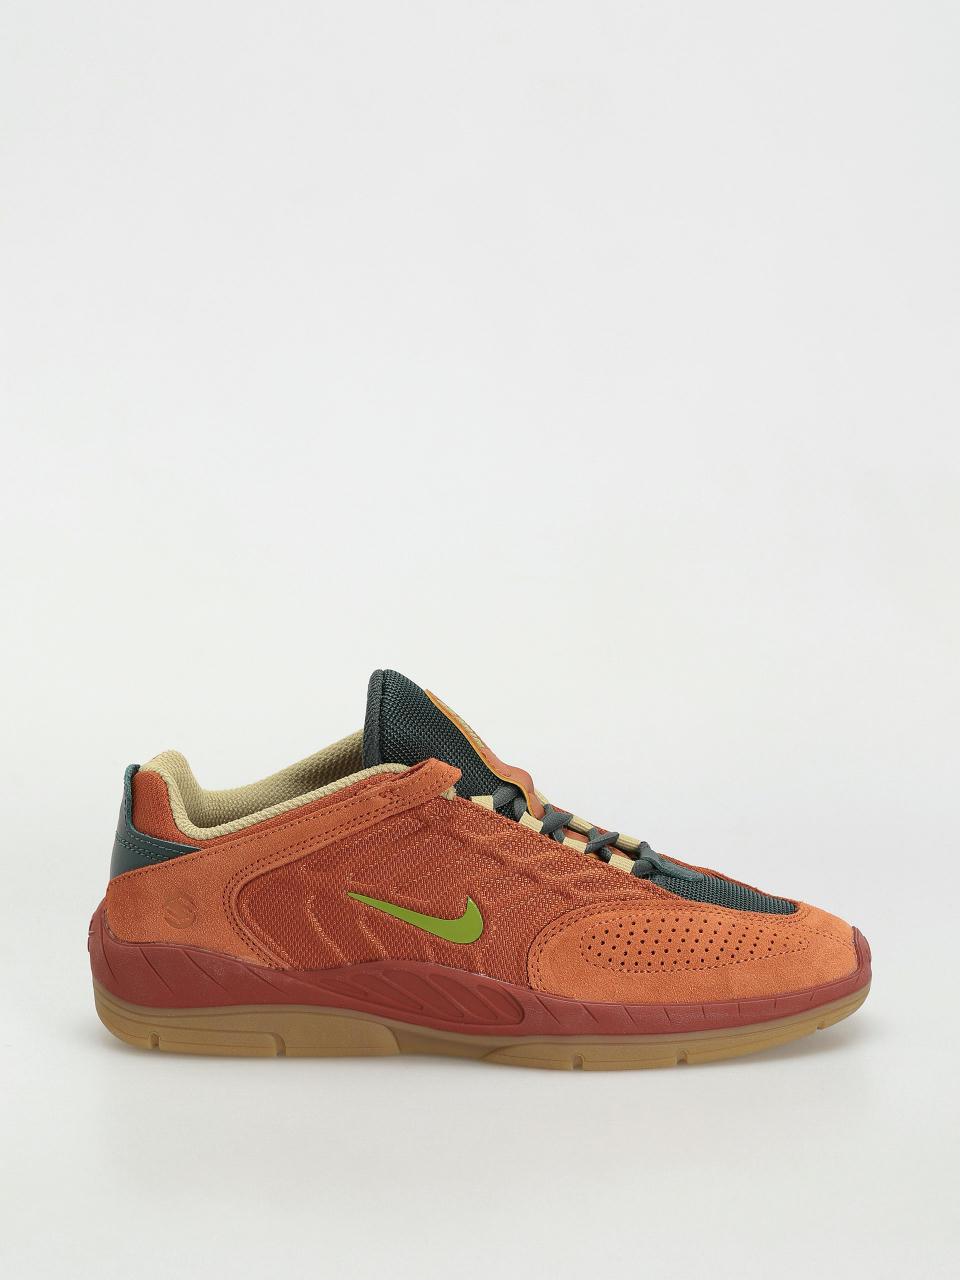 Nike SB Vertebrae Te Schuhe (dark russet/pear desert orange)